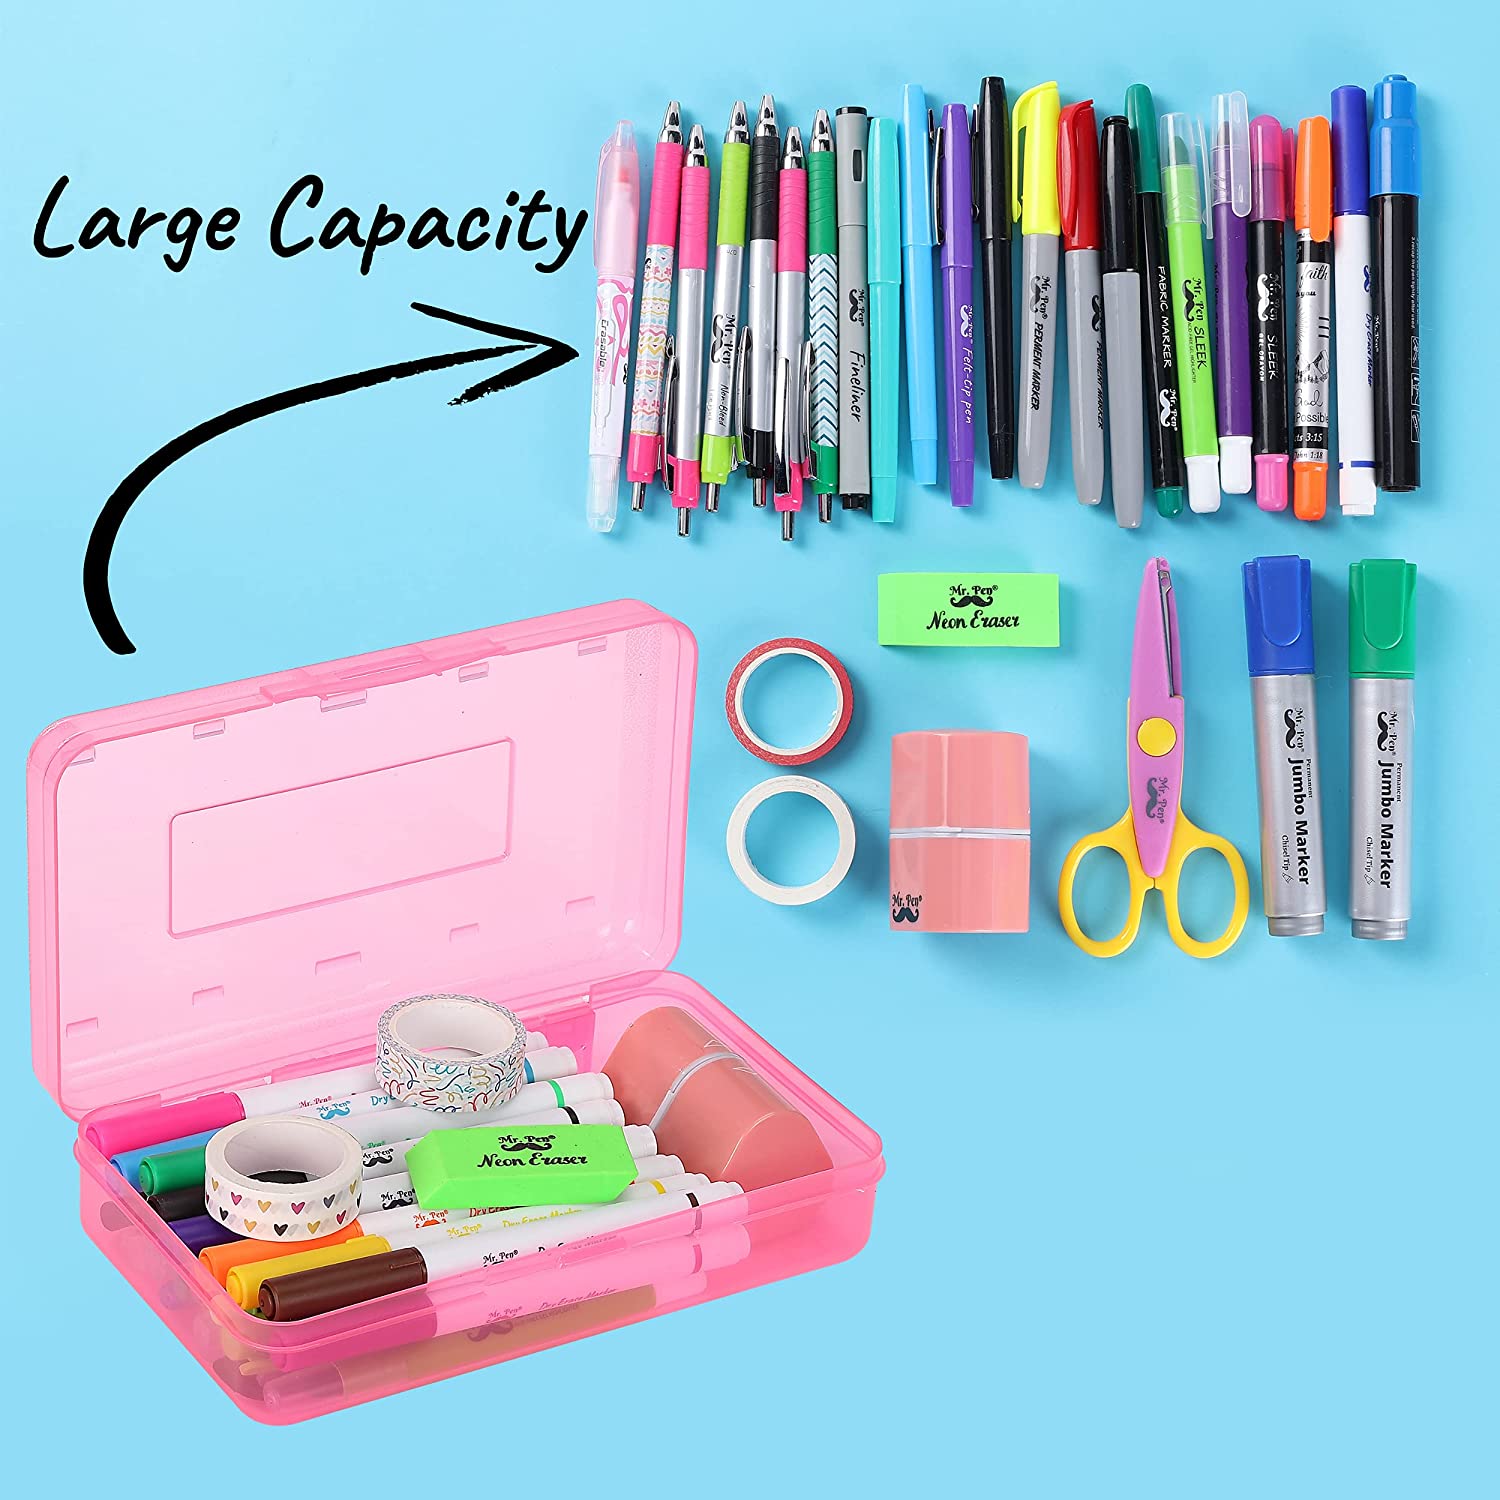 Pencil Box, 2 Pack, Assorted Color, Pencil Case for Kids, Pencil Box for Kids, Plastic Pencil Box, Hard Pencil Case, School Supply Box, Crayon Box - image 3 of 6